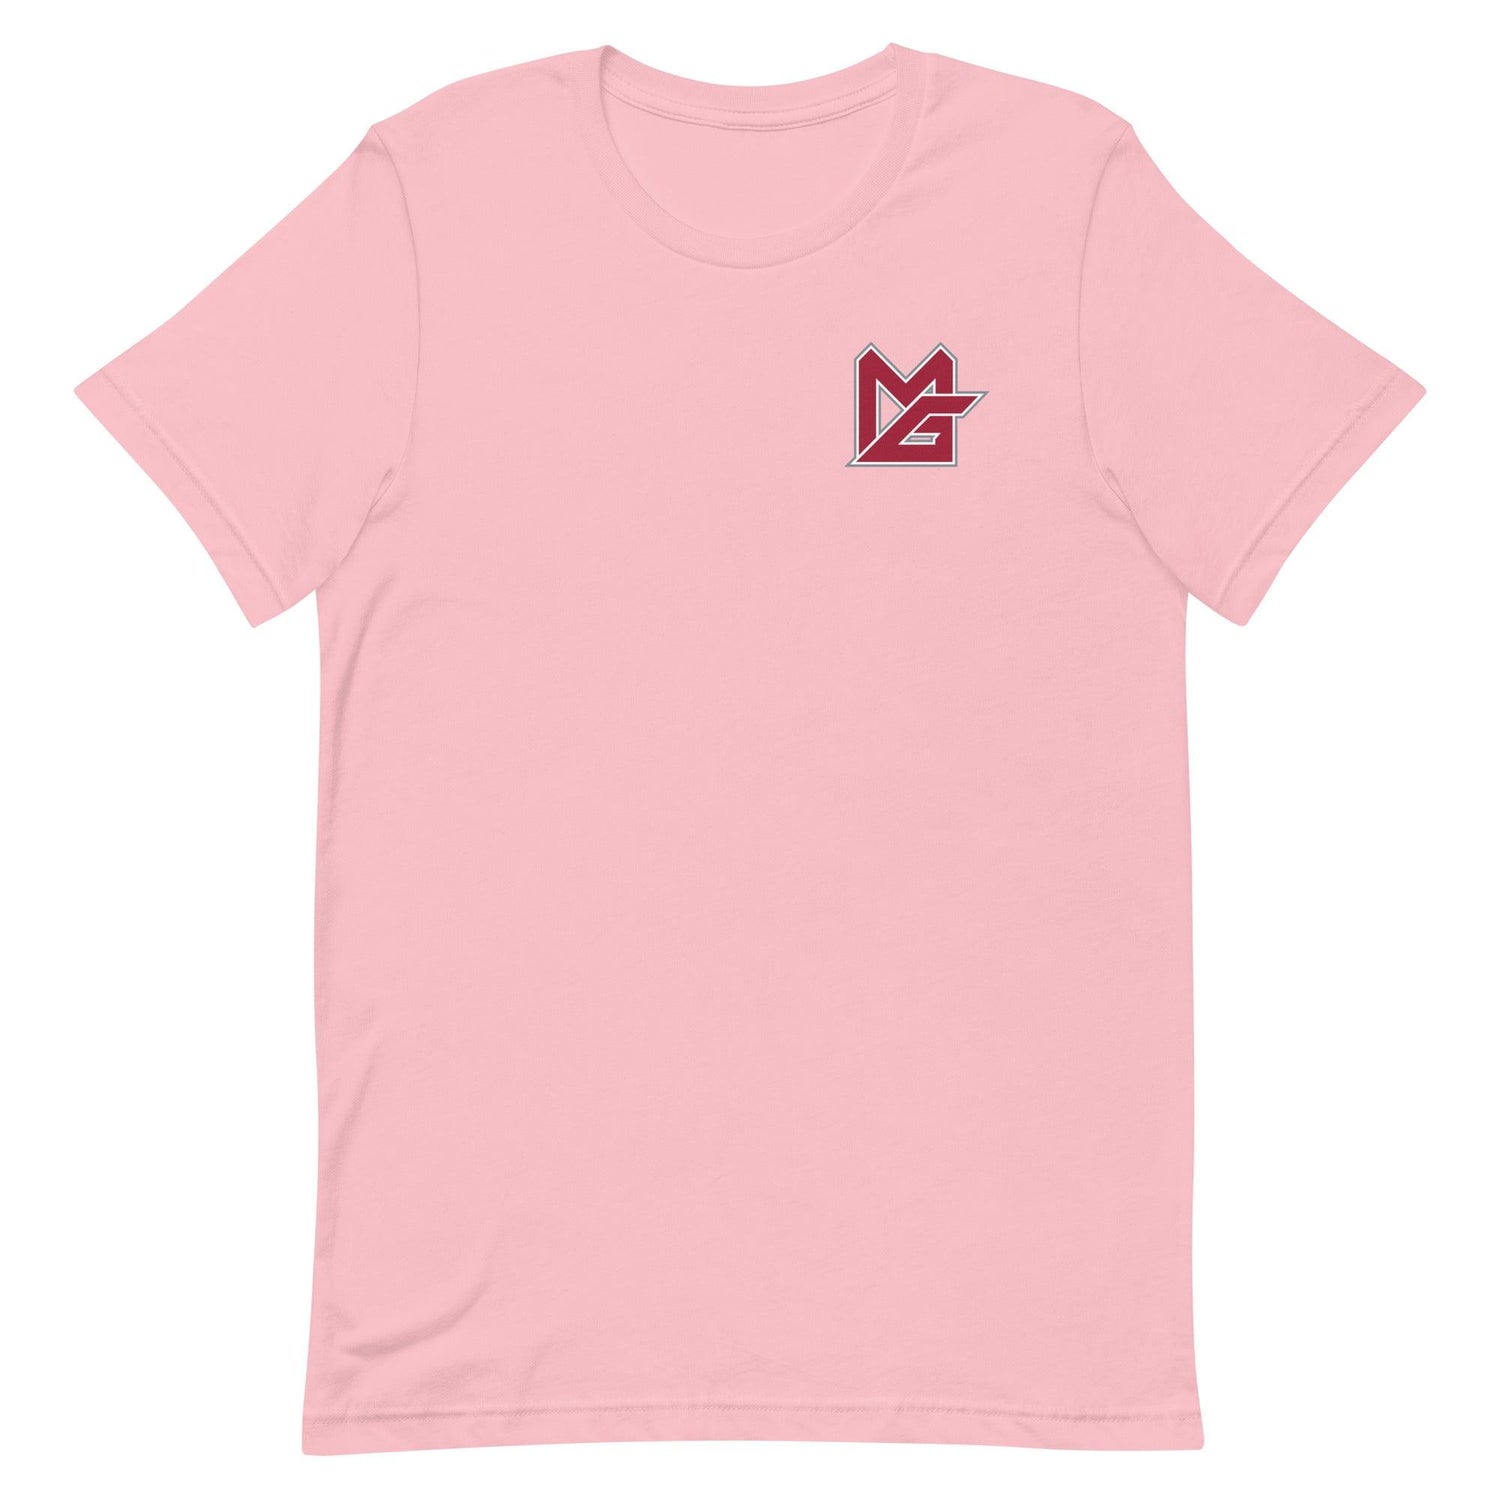 Monkell Goodwine "MG" t-shirt - Fan Arch